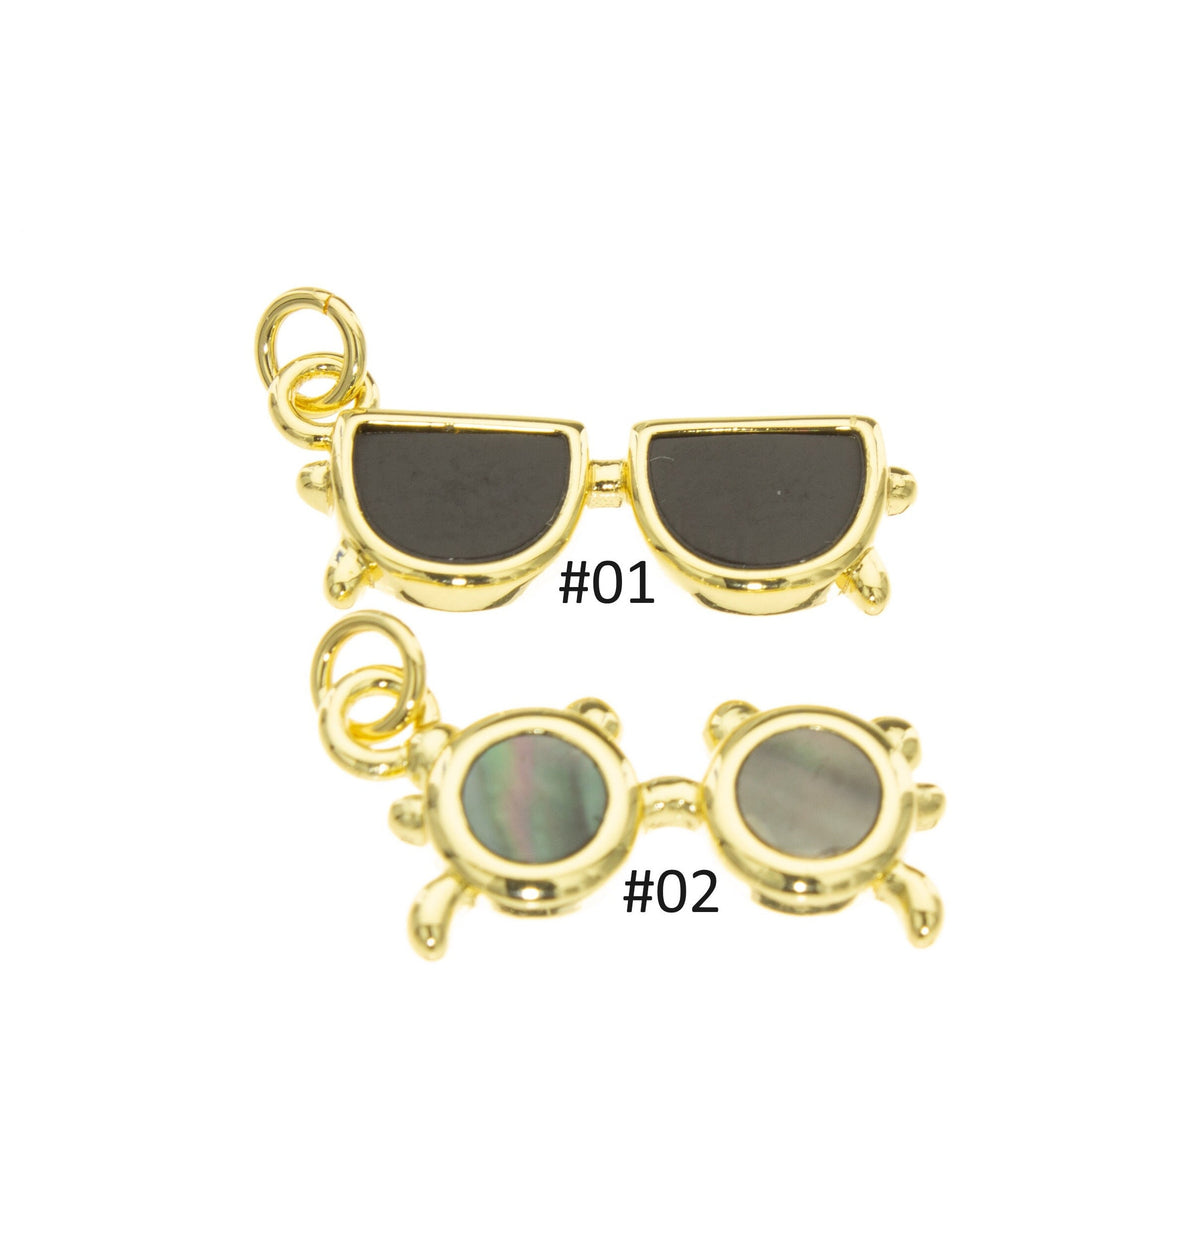 Sunglass Charm For Necklace,Gold Sunglass Pendant For Bracelet,Trending Sunglasses,Minimalist Sunglasses,CPG030,CPS031